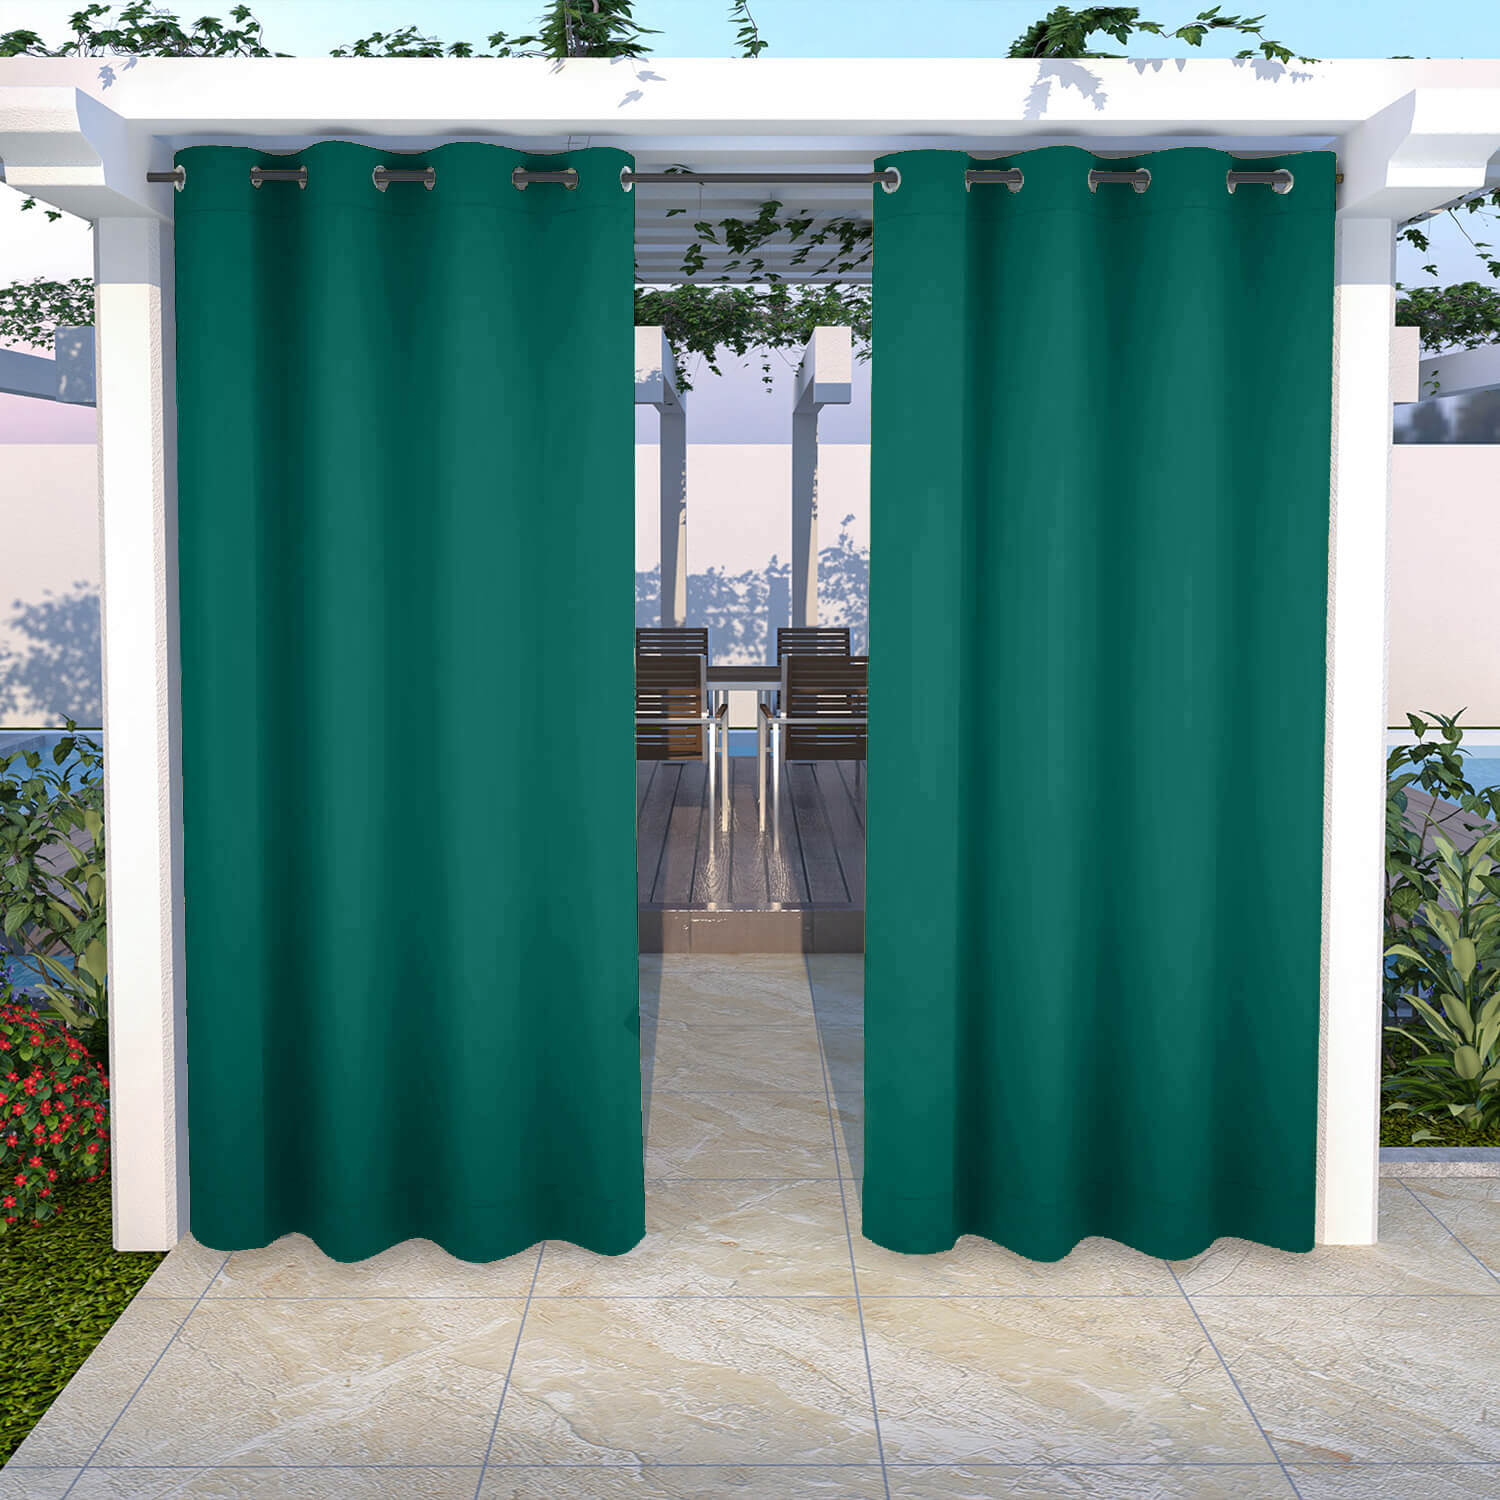 Snowcity Outdoor Curtains Waterproof Grommet Top 1 Panel - Forest Green